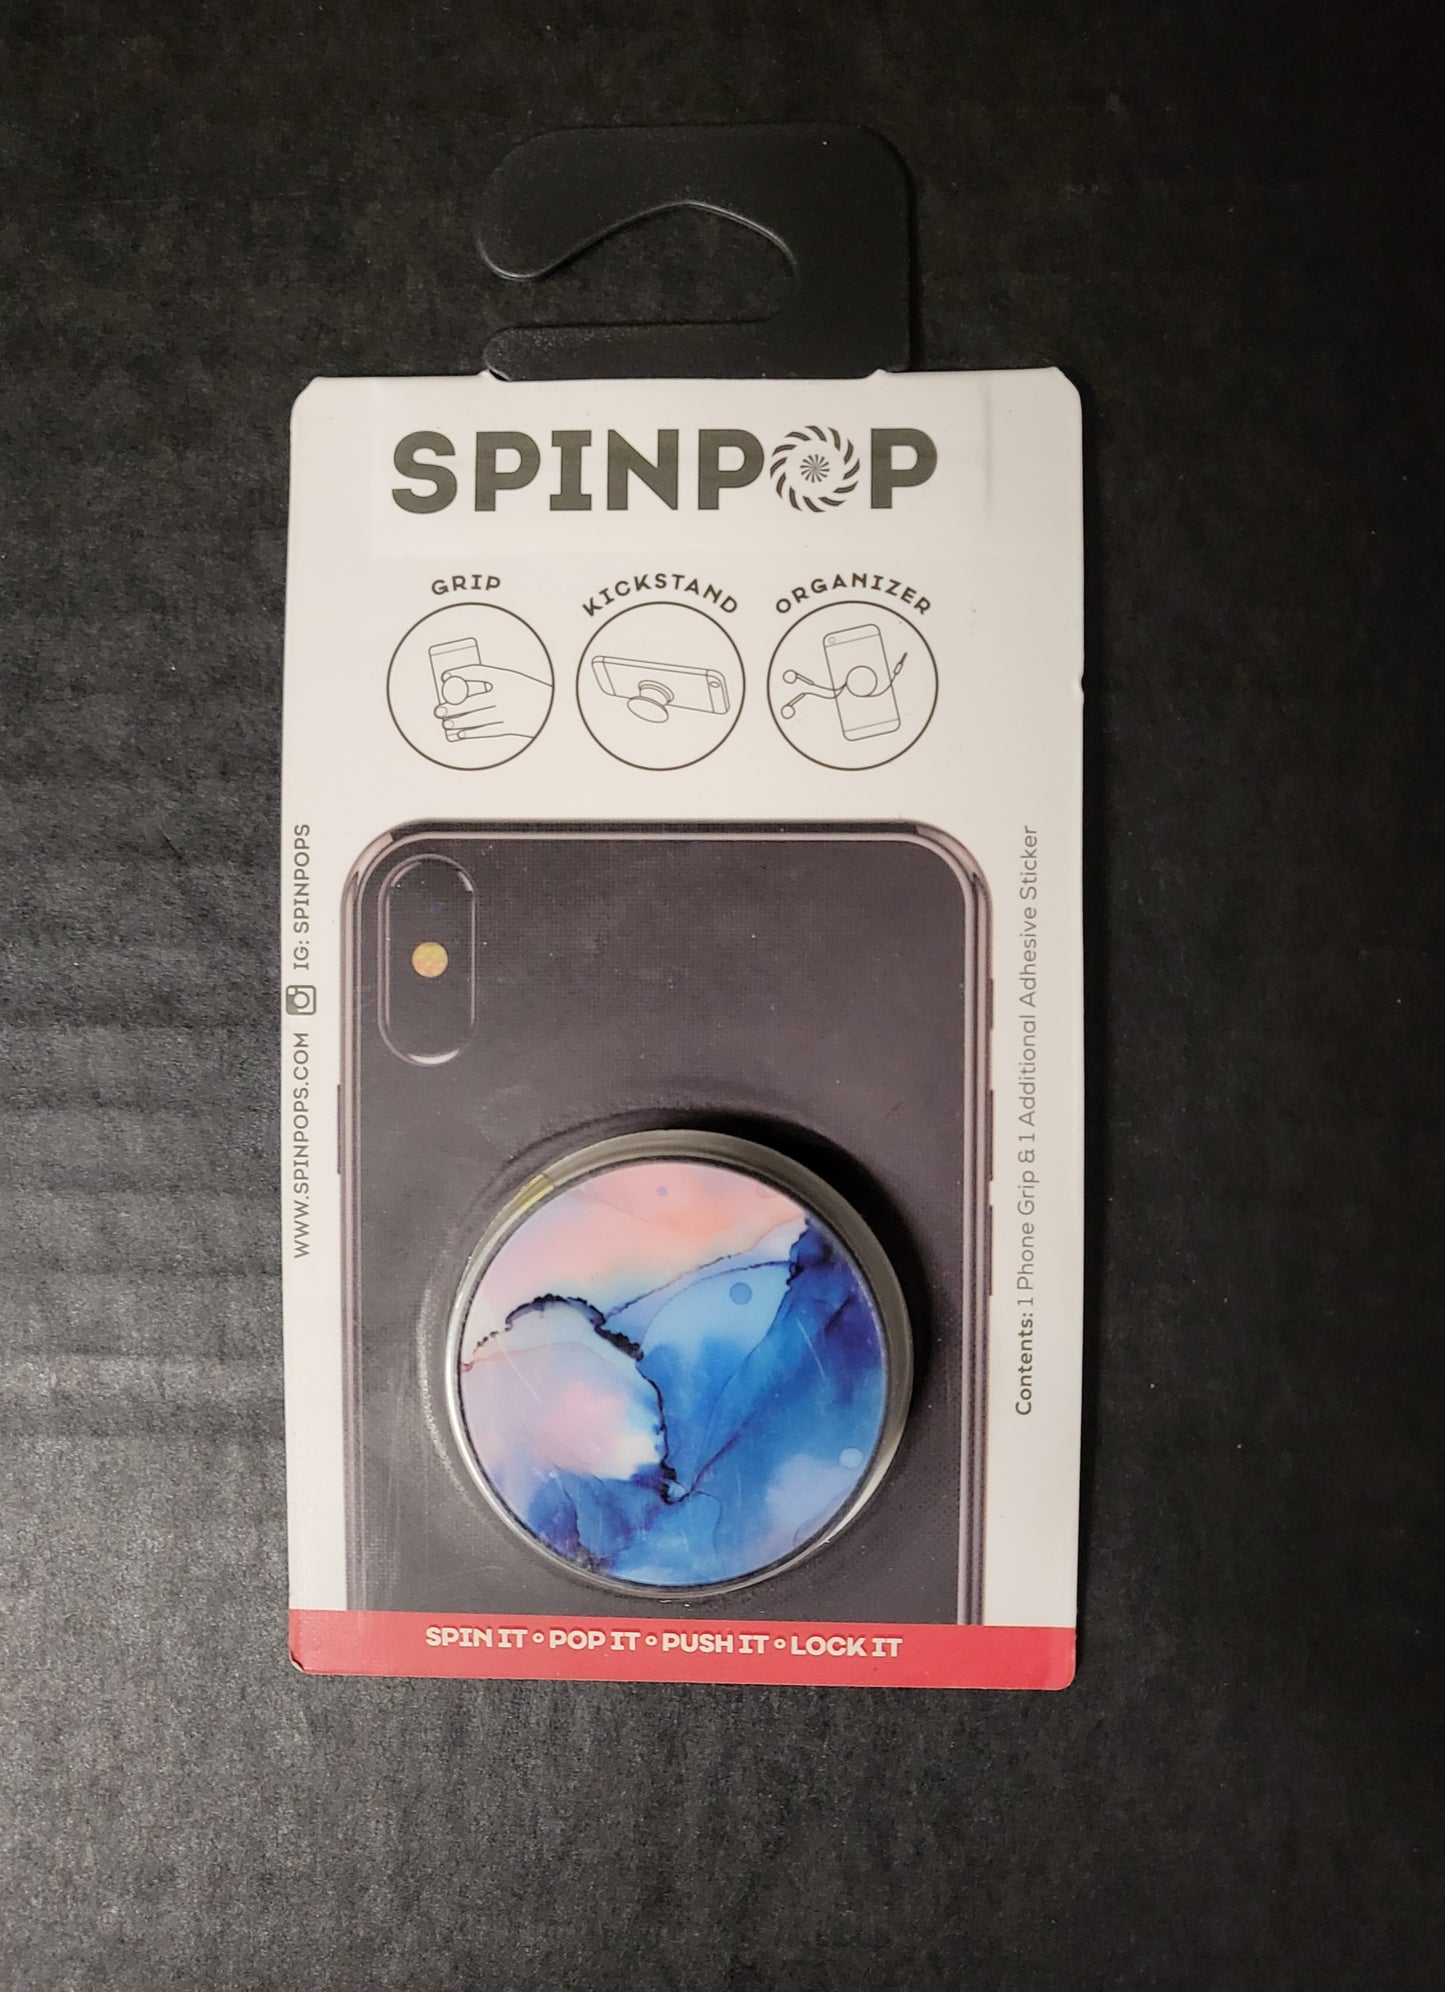 Spinpop Phone Accessory Grip Kickstand Organizer